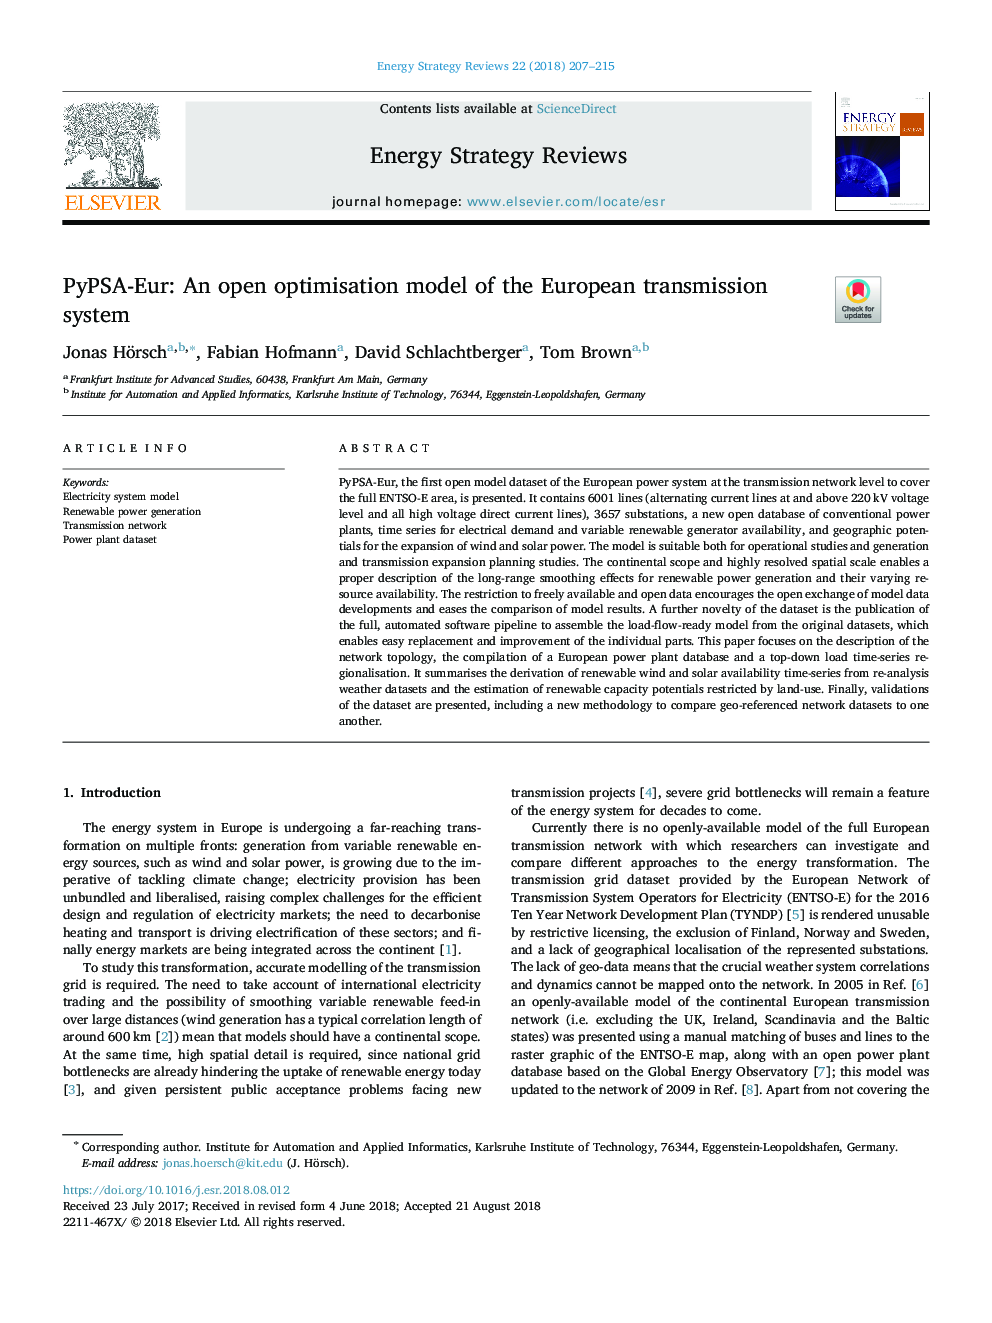 PyPSA-Eur: An open optimisation model of the European transmission system